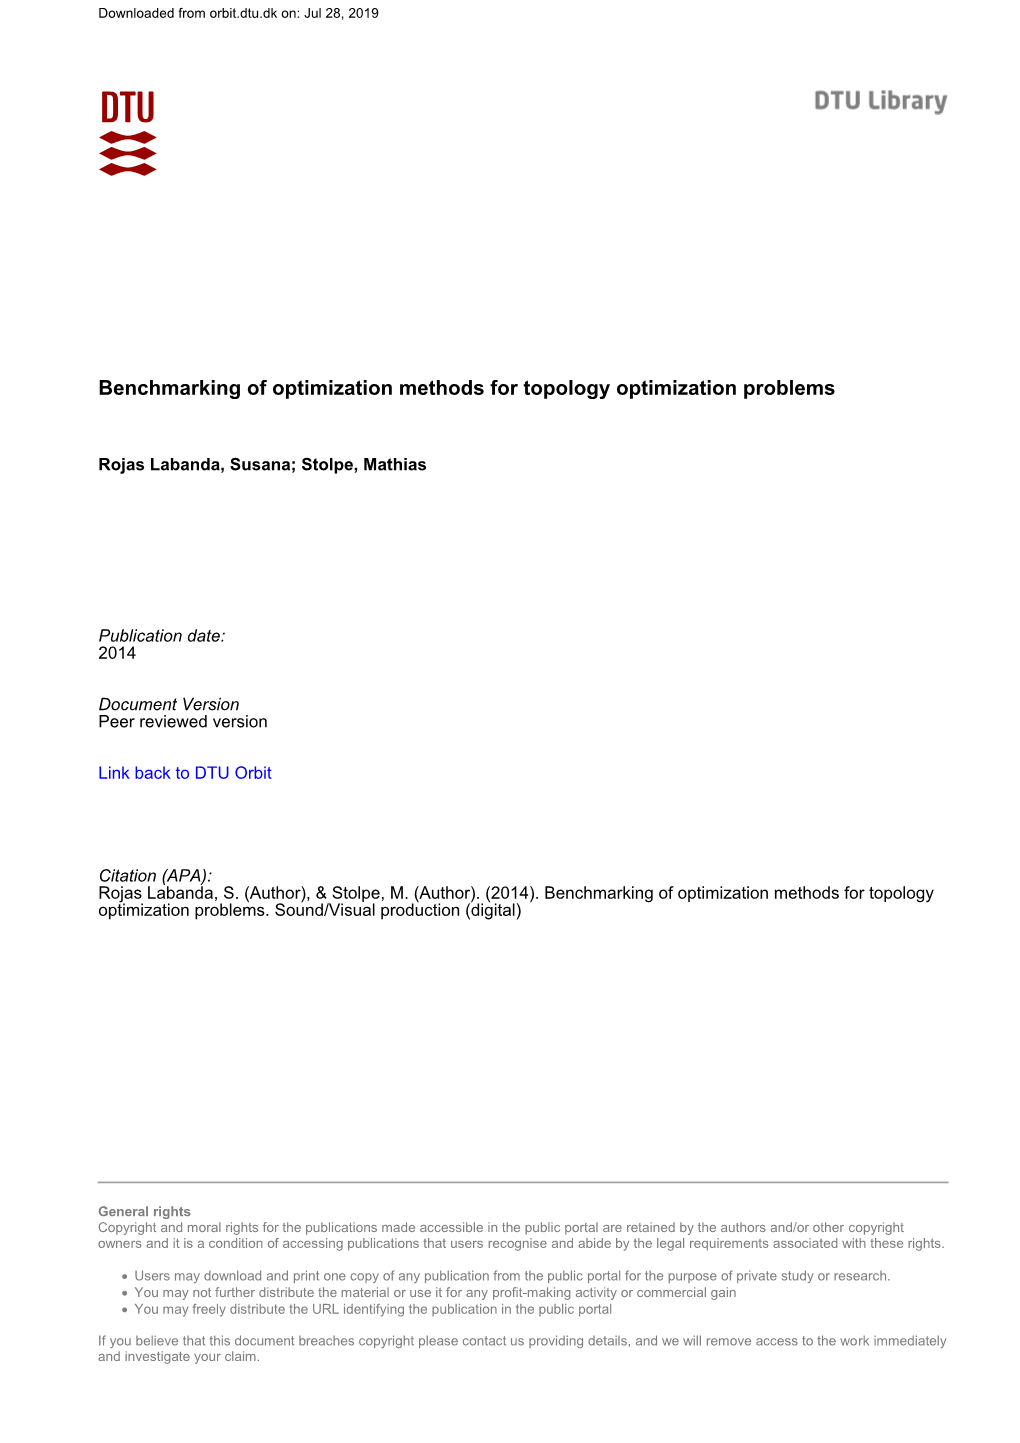 Benchmarking of Optimization Methods for Topology Optimization Problems